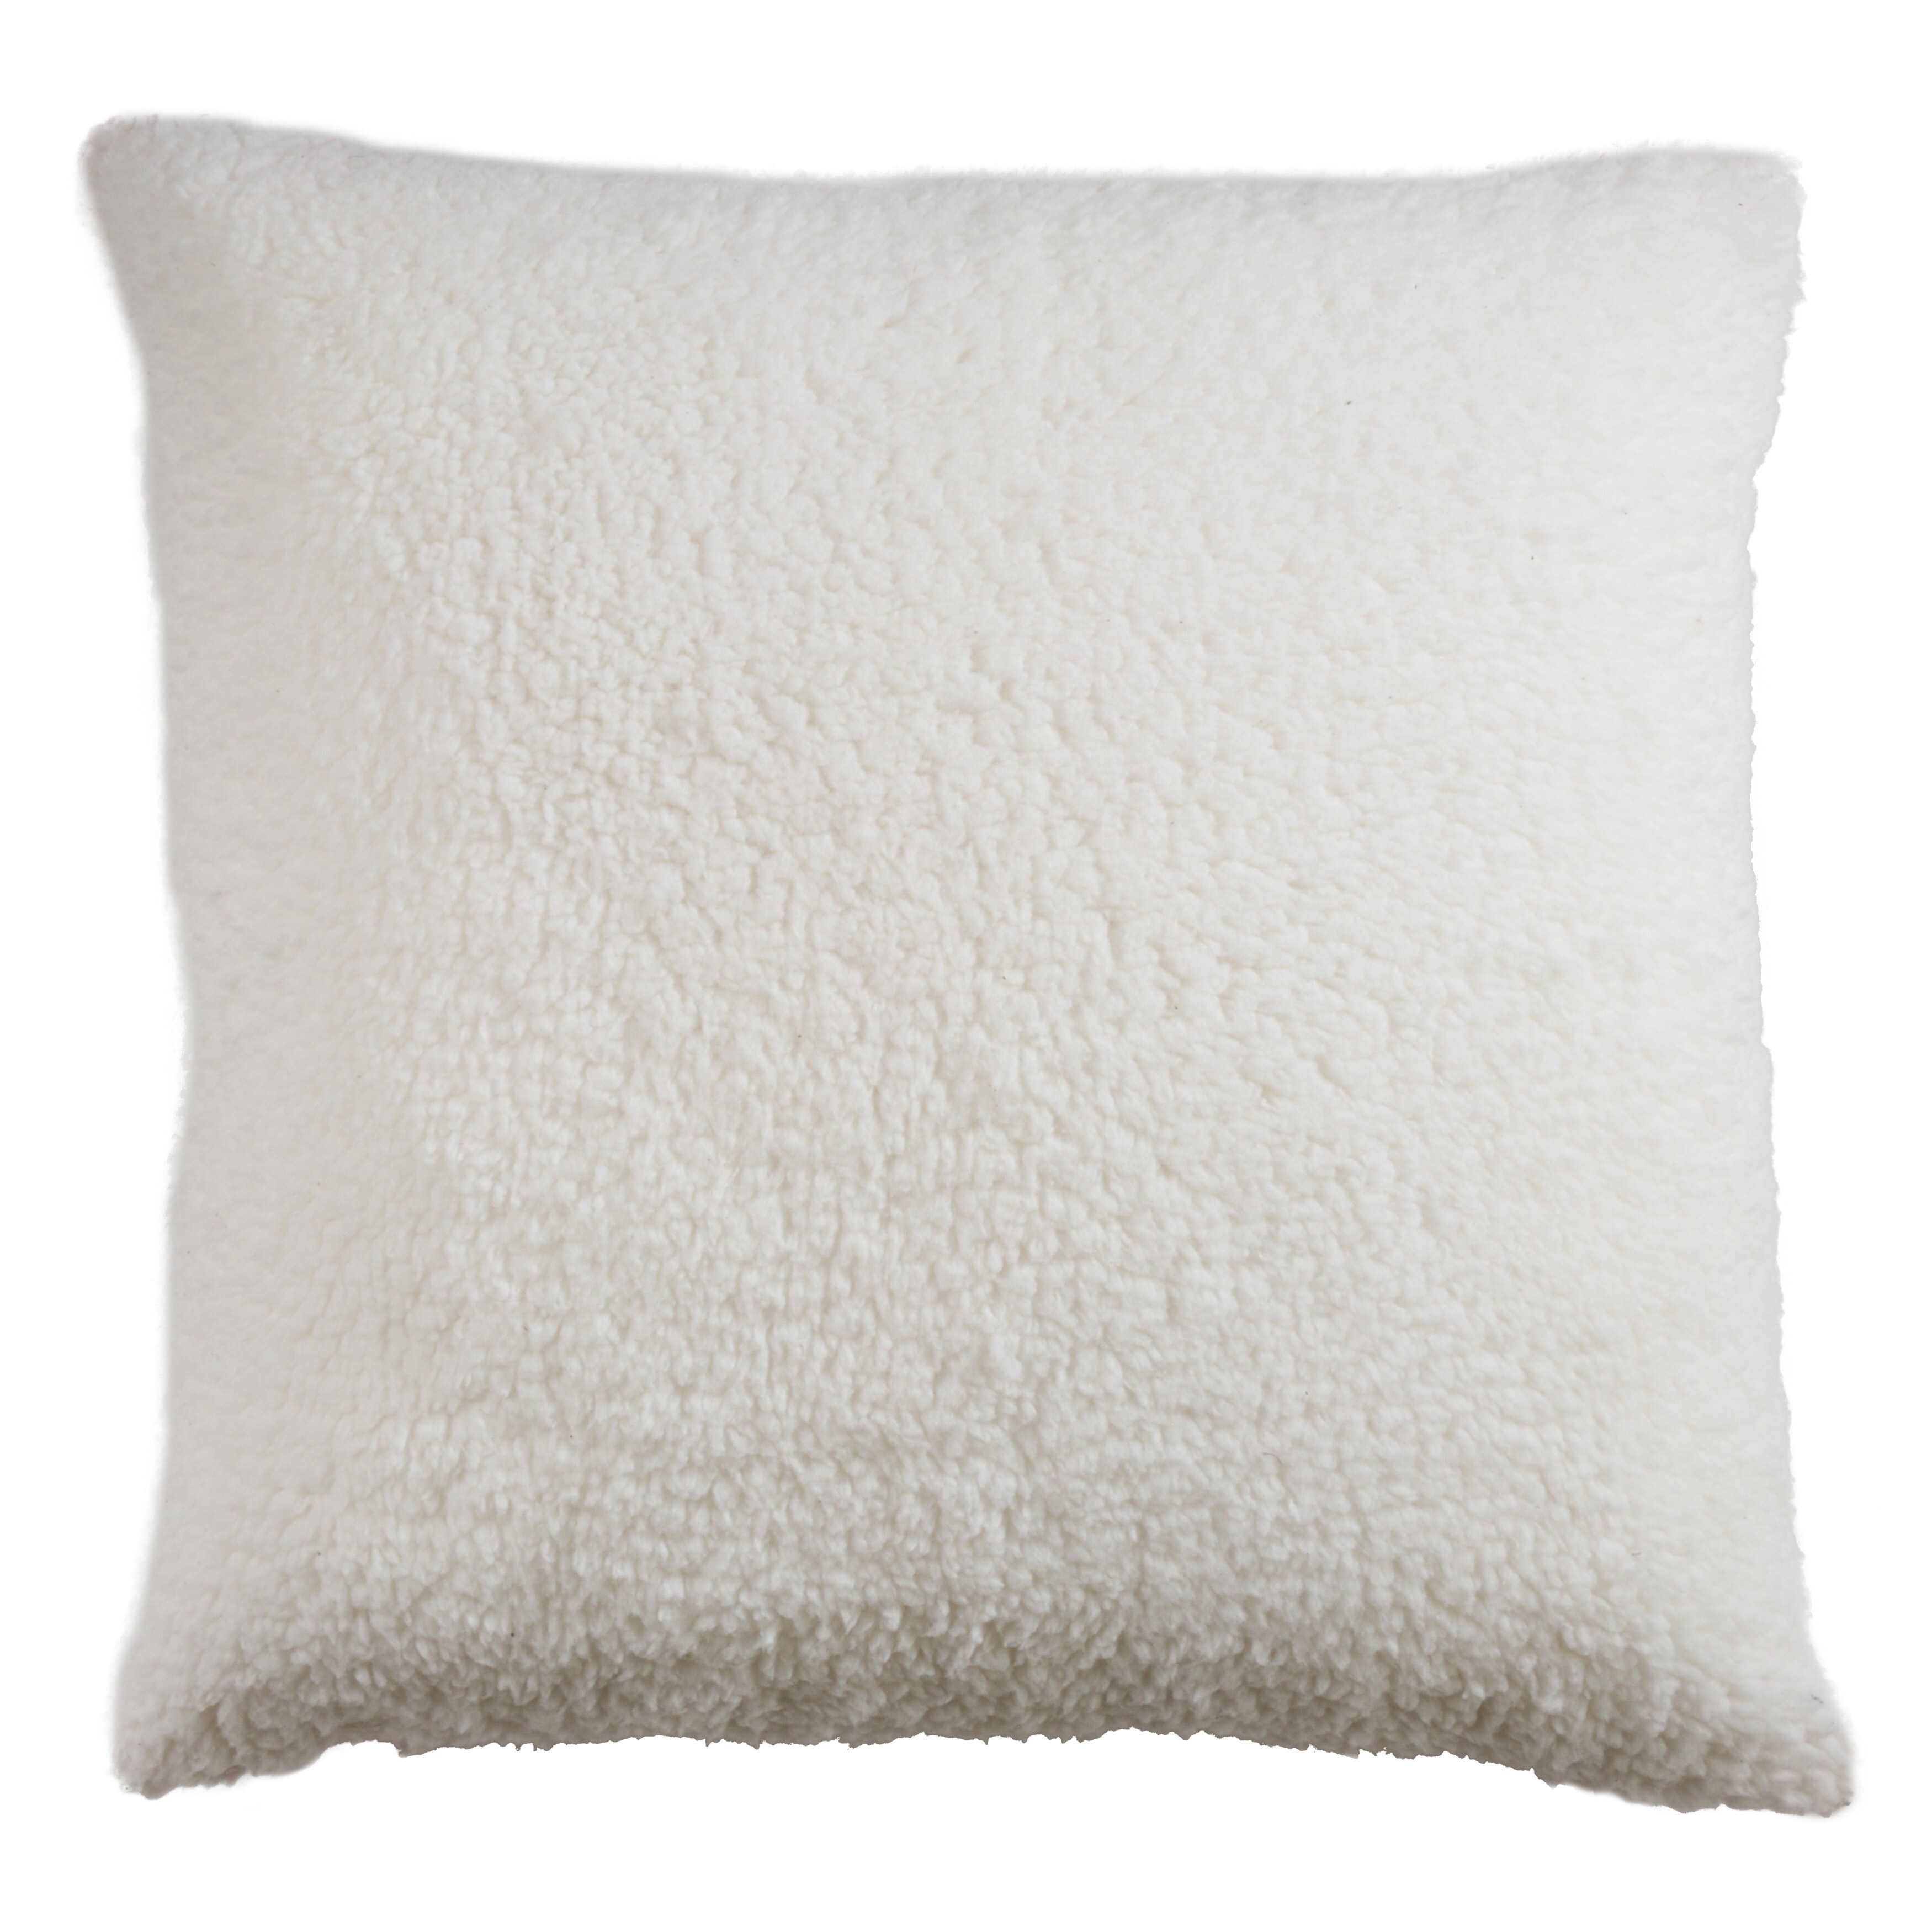 18x18 Throw Pillow Cover: Diagnol Corded Stripe